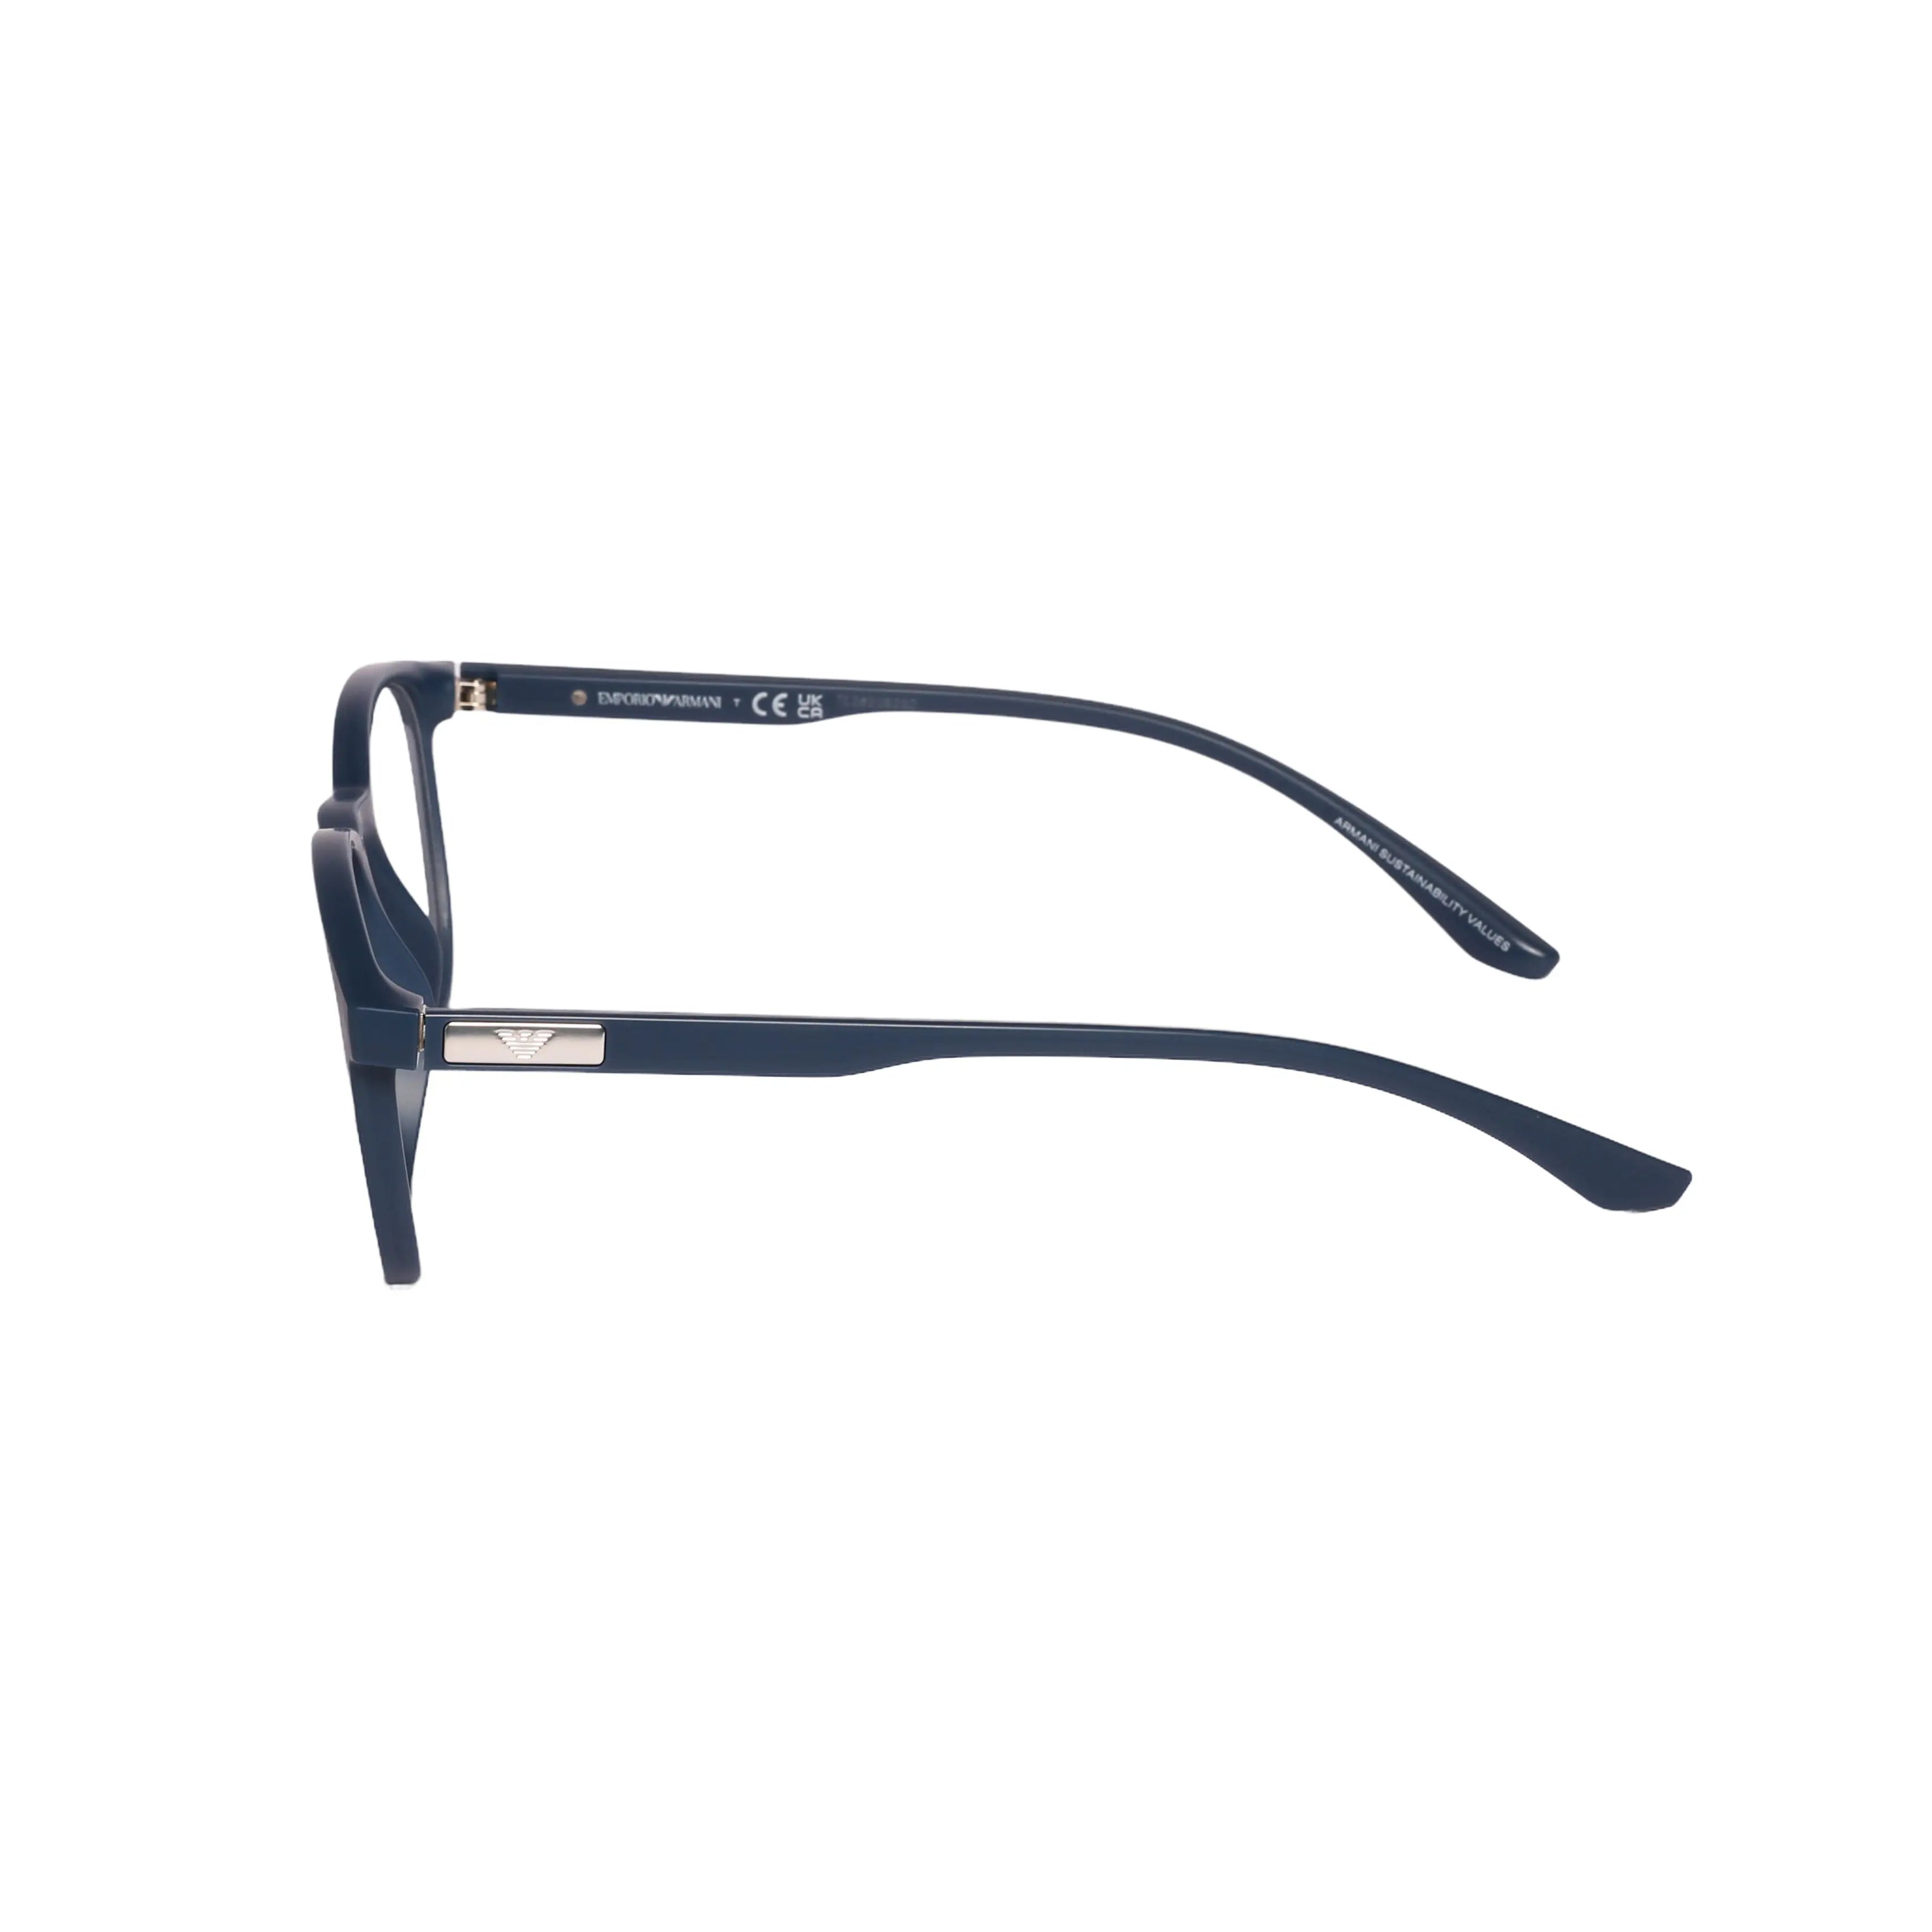 Emporio Armani-EA 3229-51-5763 Eyeglasses - Premium Eyeglasses from Emporio Armani - Just Rs. 10490! Shop now at Laxmi Opticians